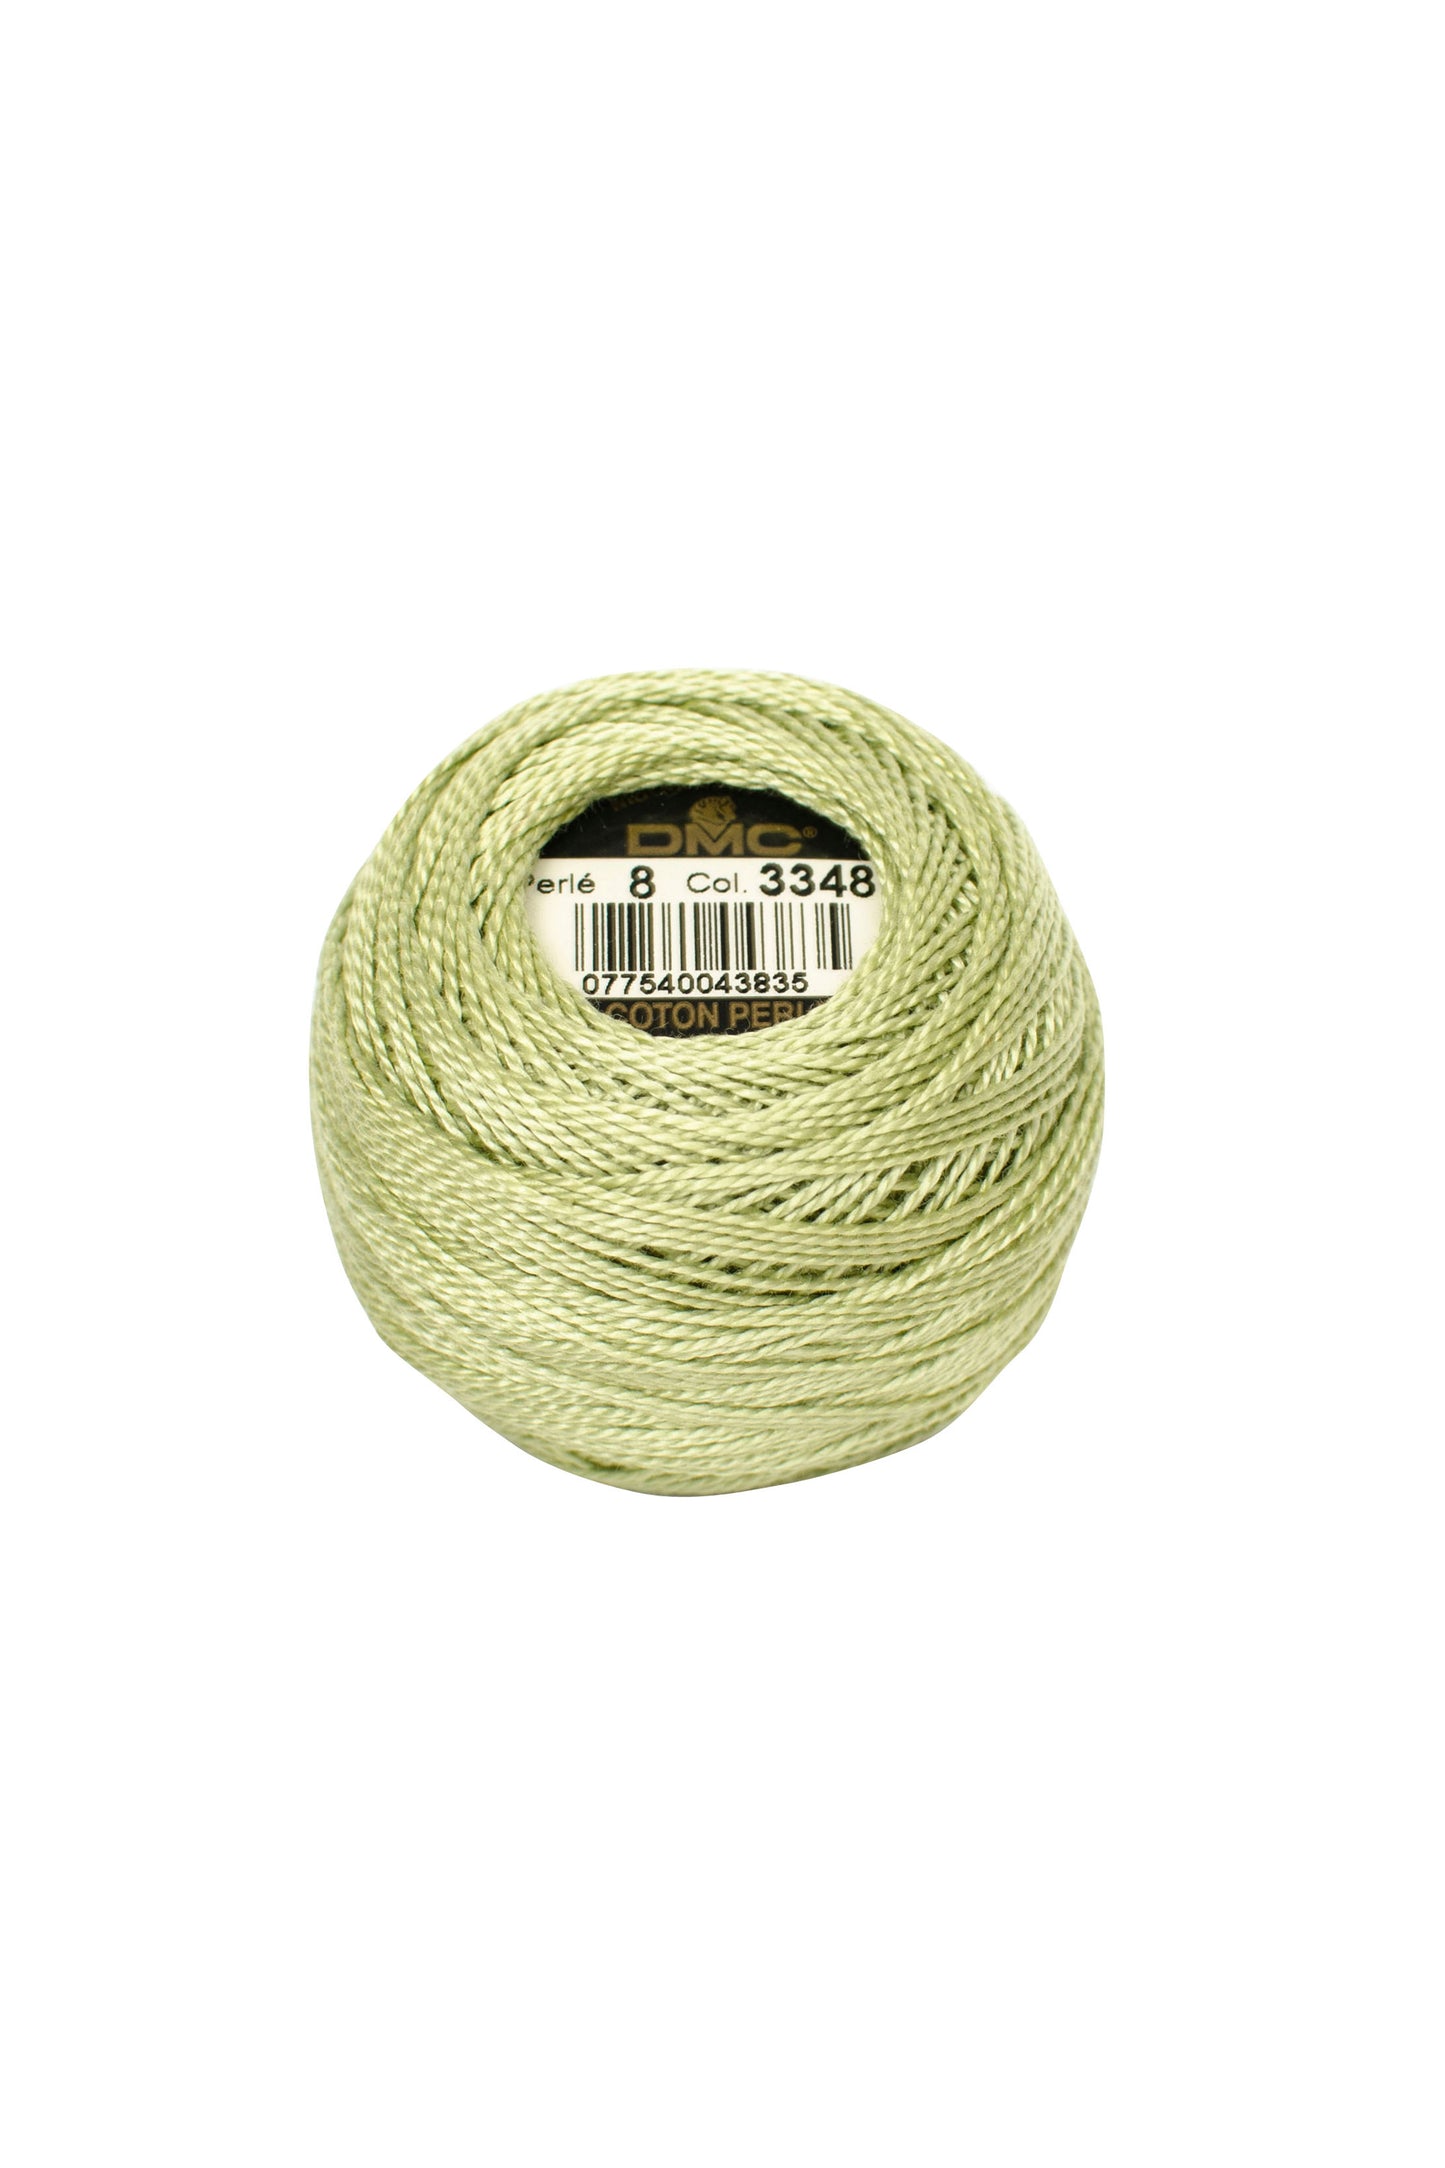 3348 Light Yellow Green - DMC #5 Perle Cotton Ball